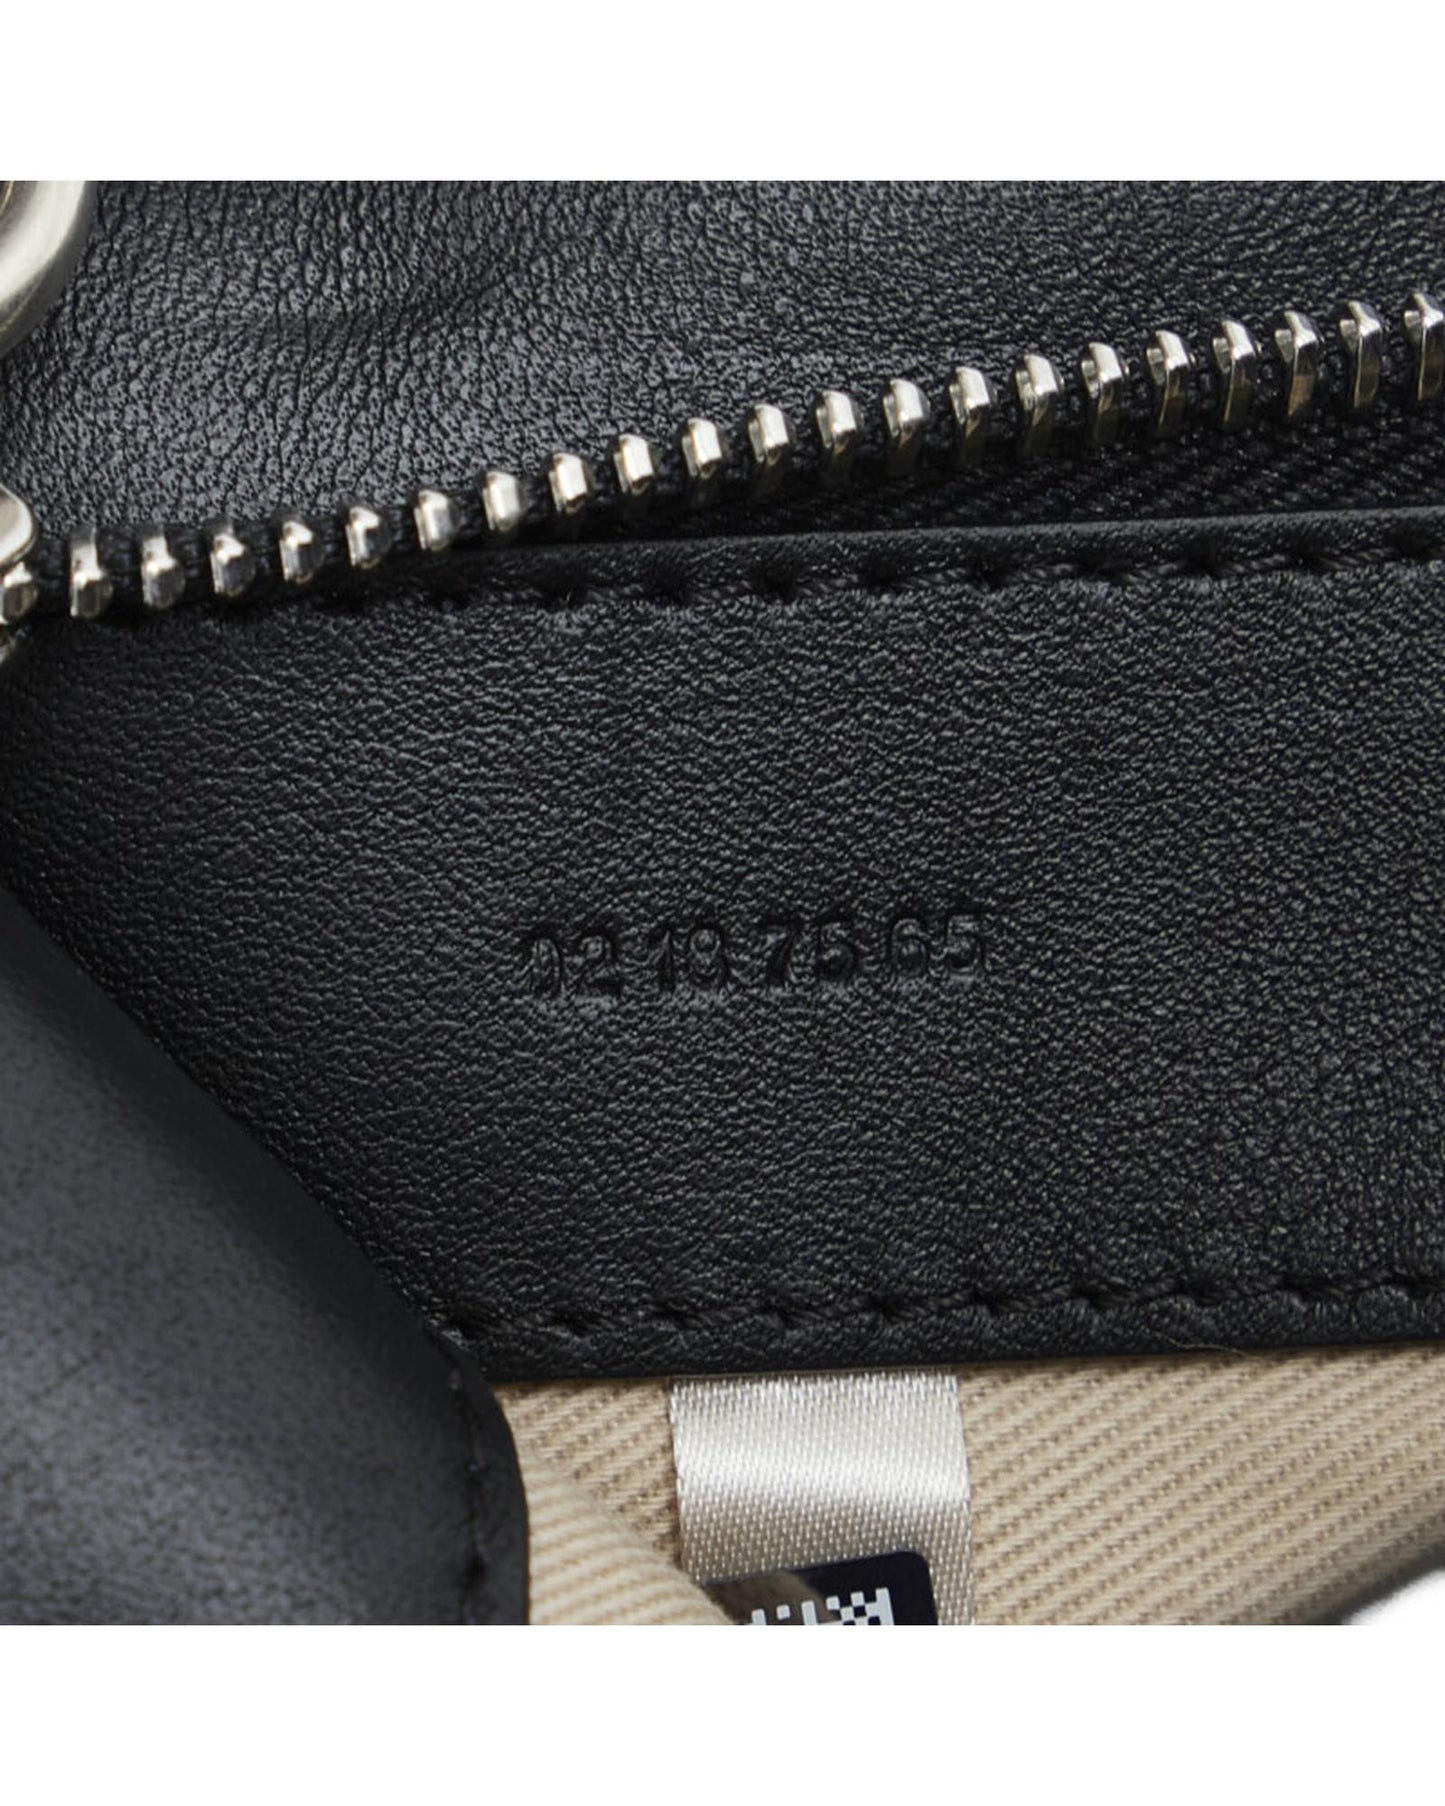 Chloe Women's Quilted Leather Shoulder Bag in Black